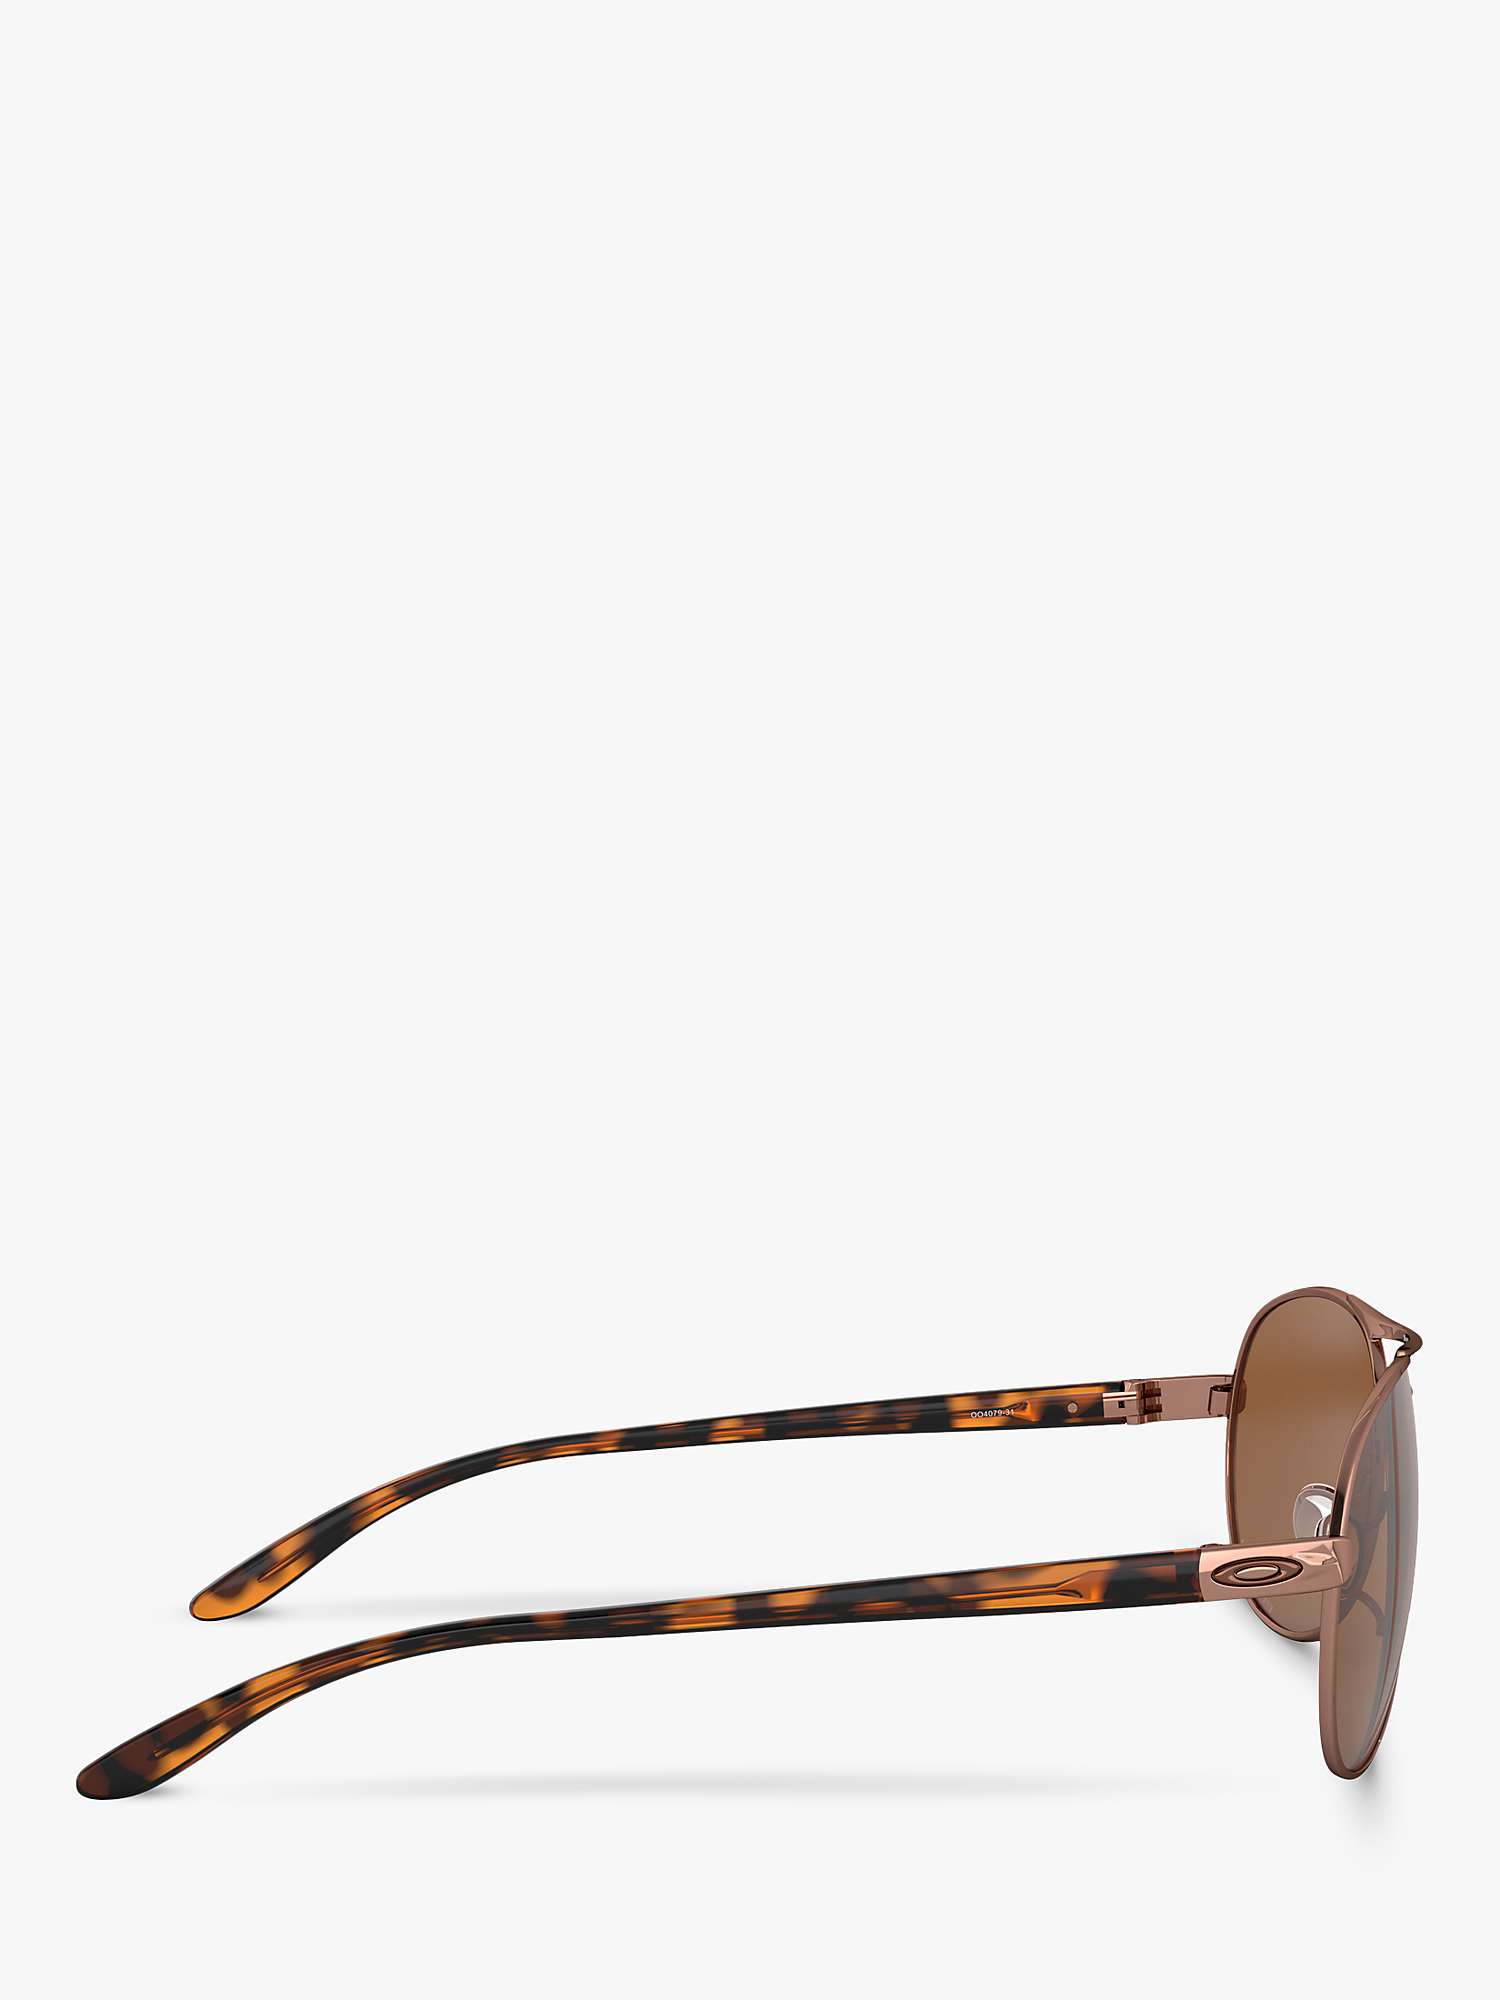 Buy Oakley OO4079 Women's Feedback Polarised Aviator Sunglasses Online at johnlewis.com